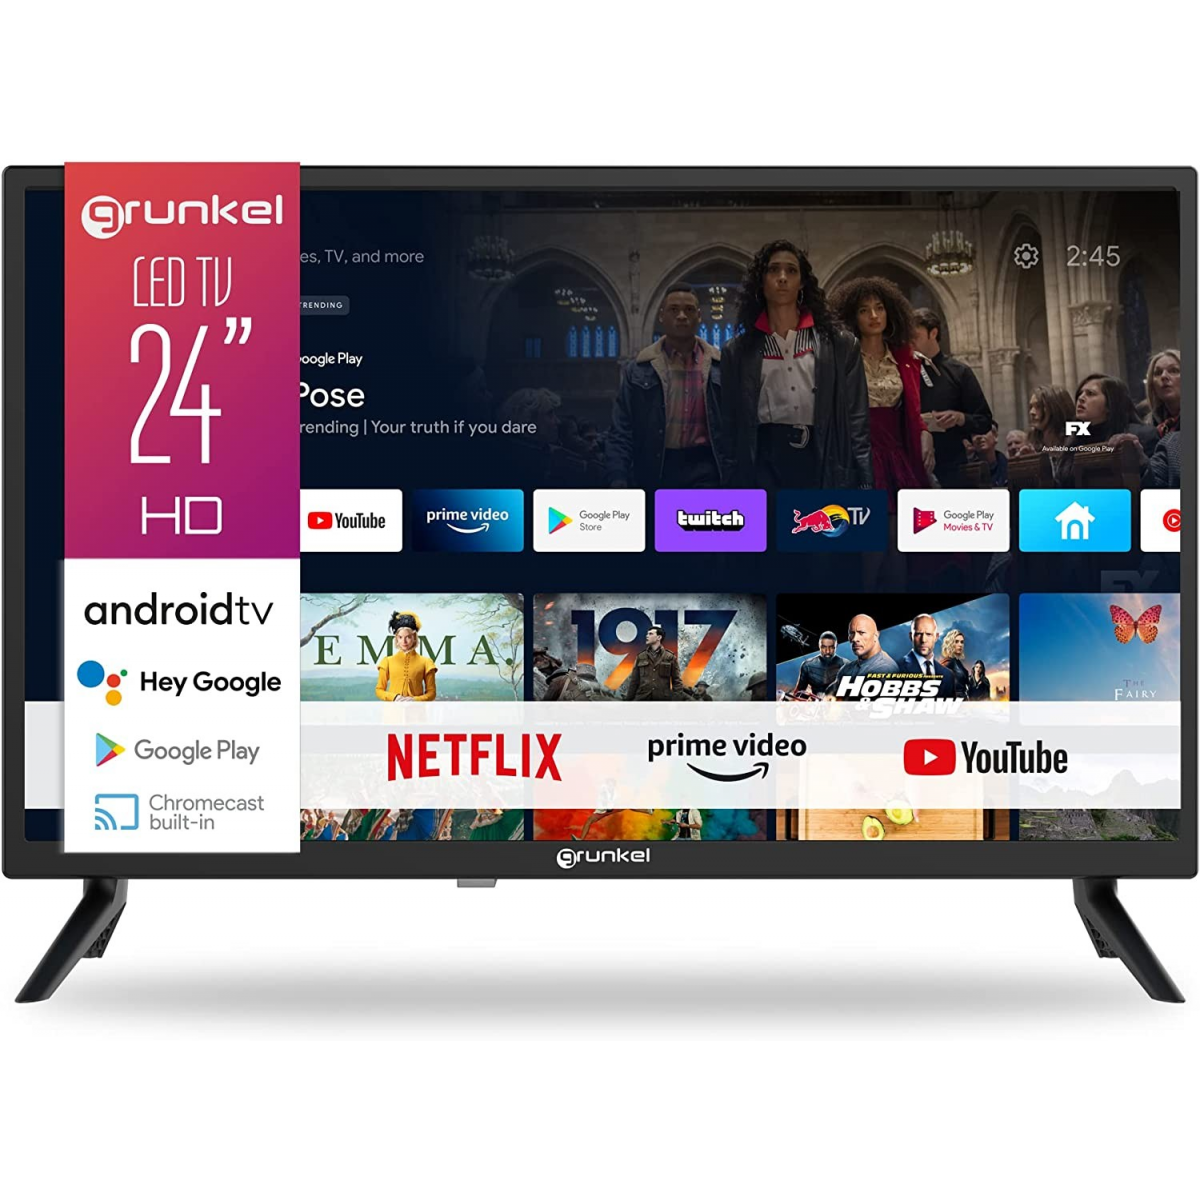 Smart TV 24 pulgadas Led HD, televisor Hey Google Official